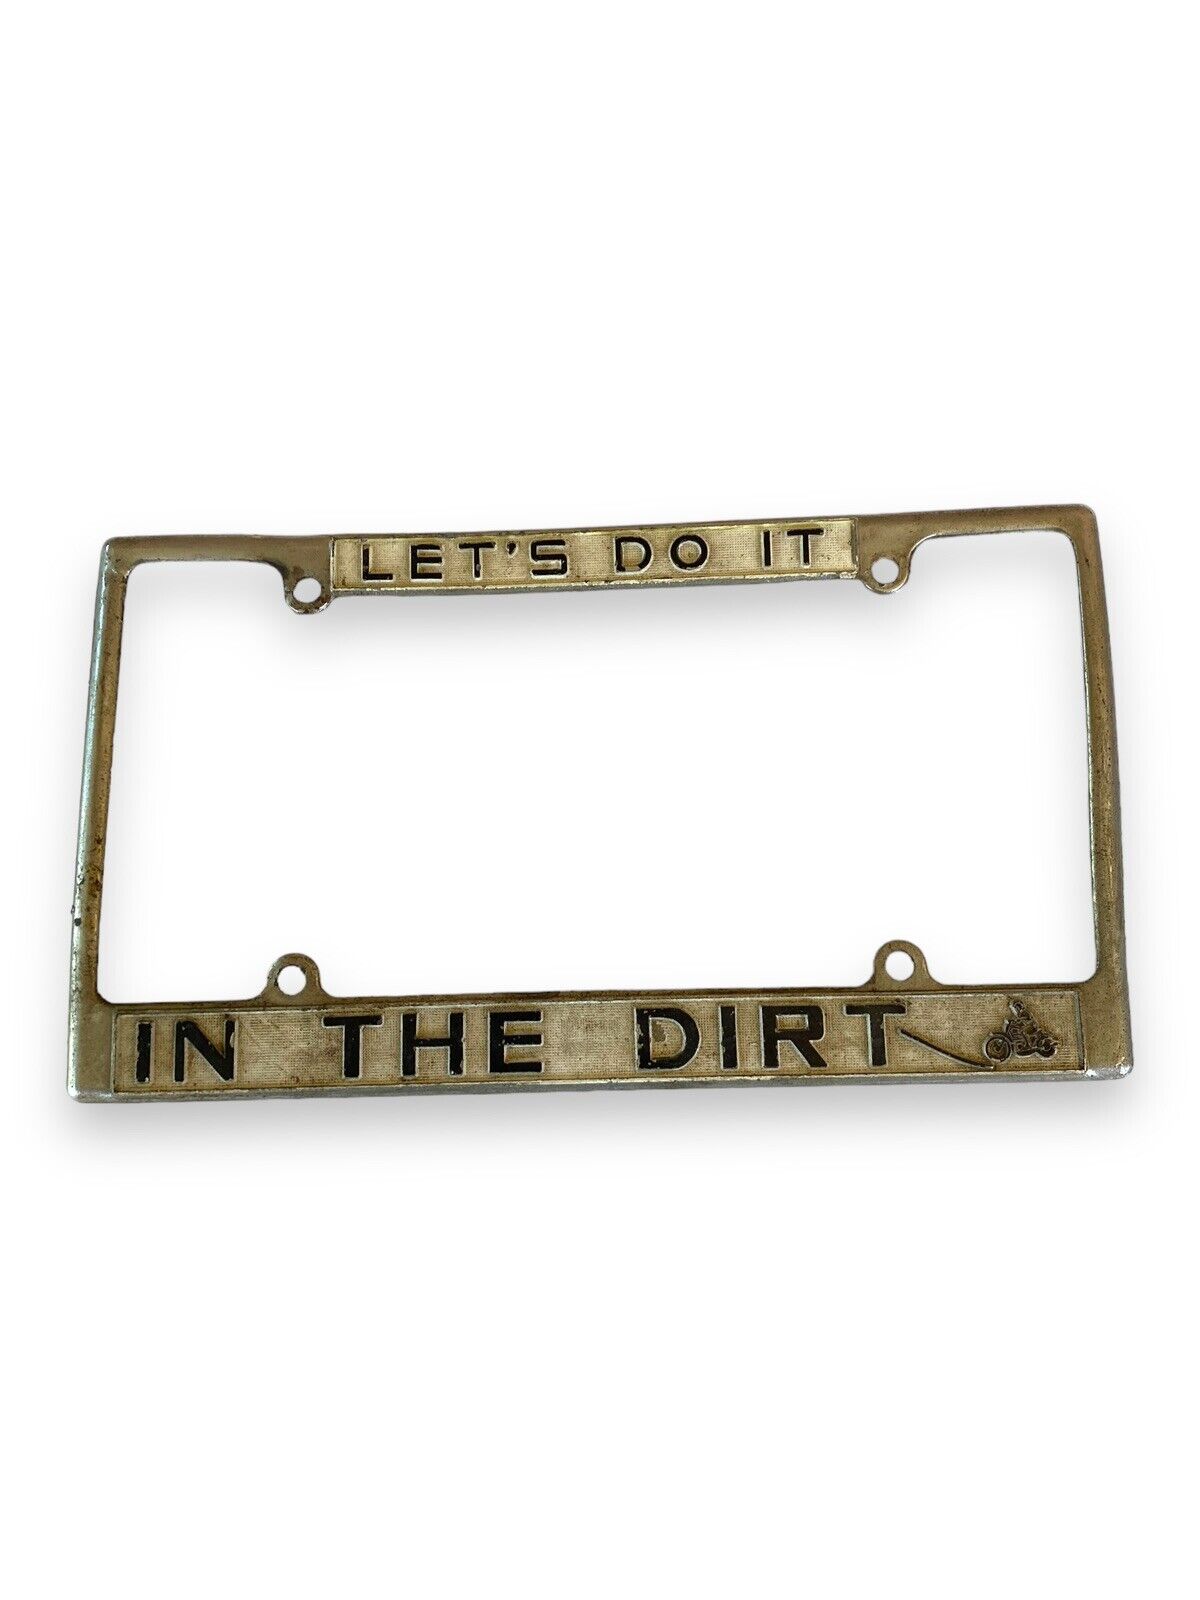 Vintage “Let’s Do It In The Dirt” Metal License Plate Frame Dirt Bike Motorcycle